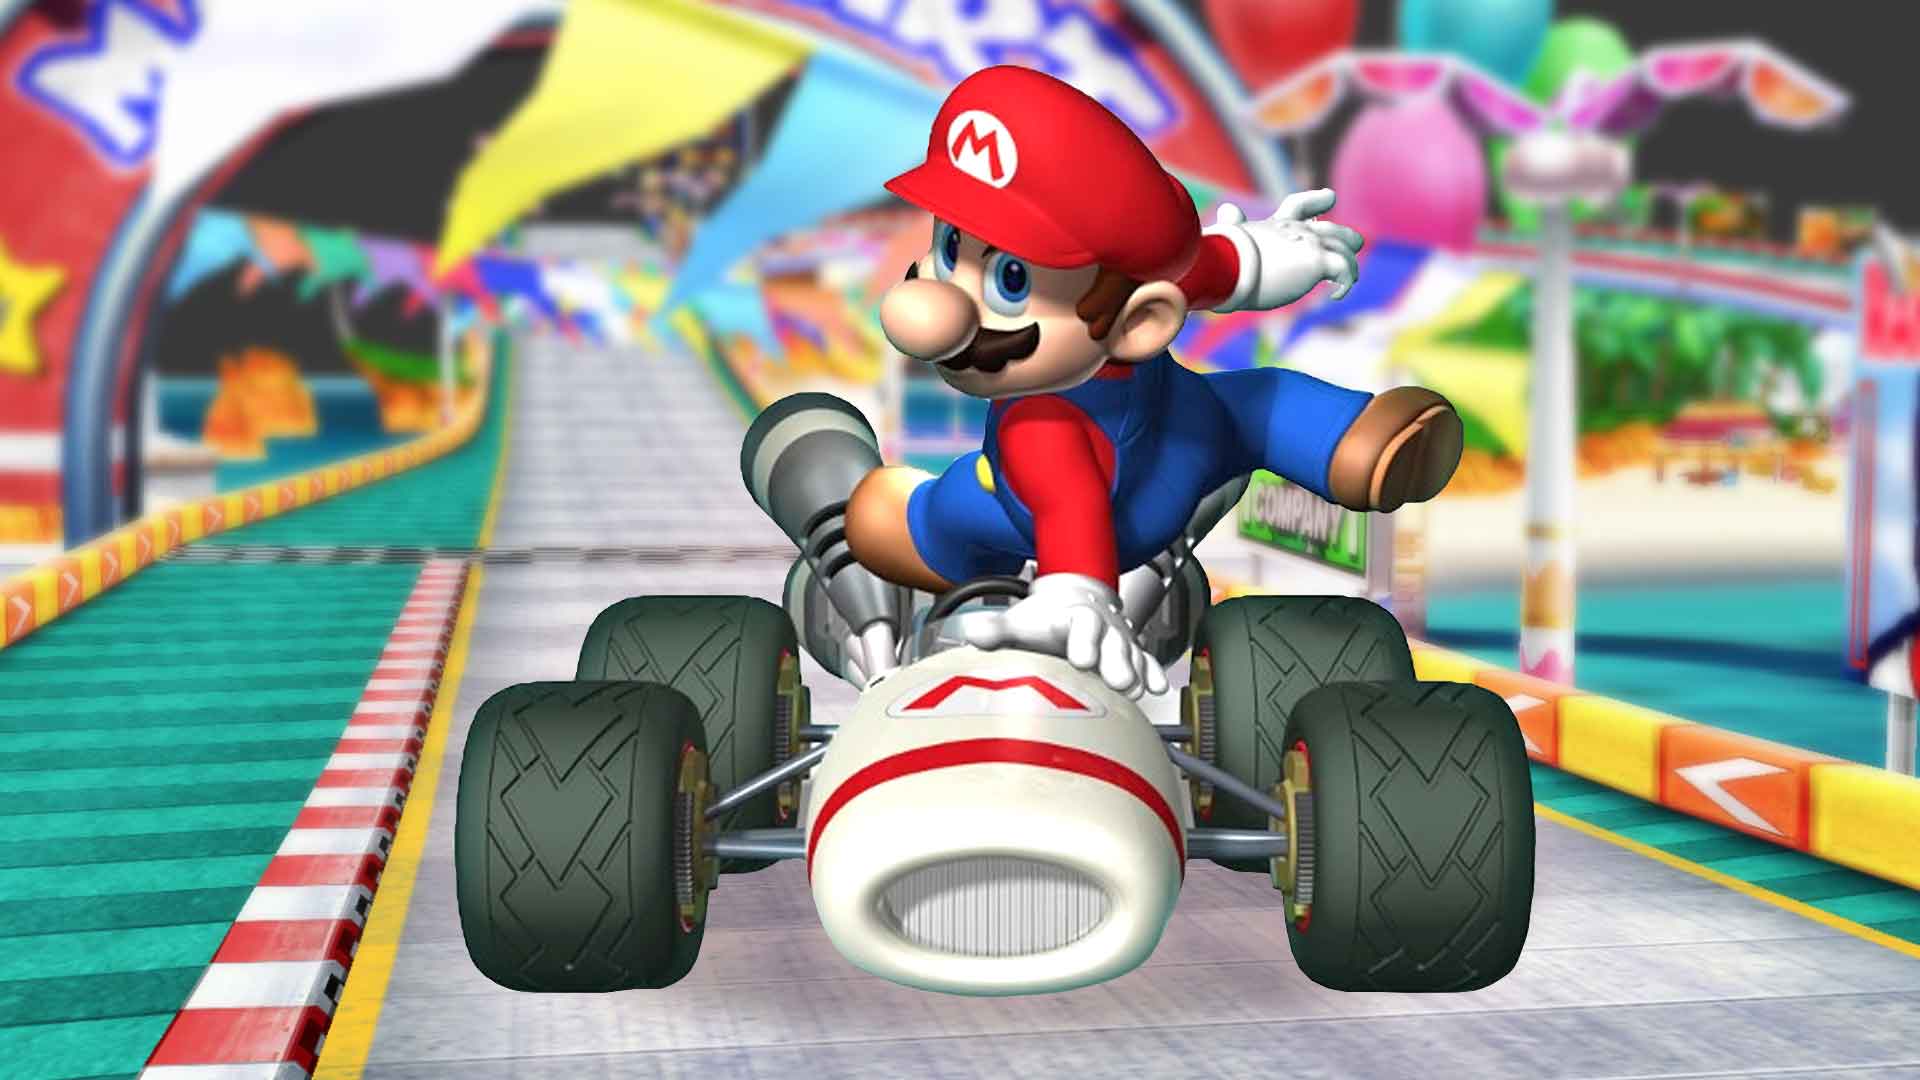 Infographic: The Evolution Of Mario Kart